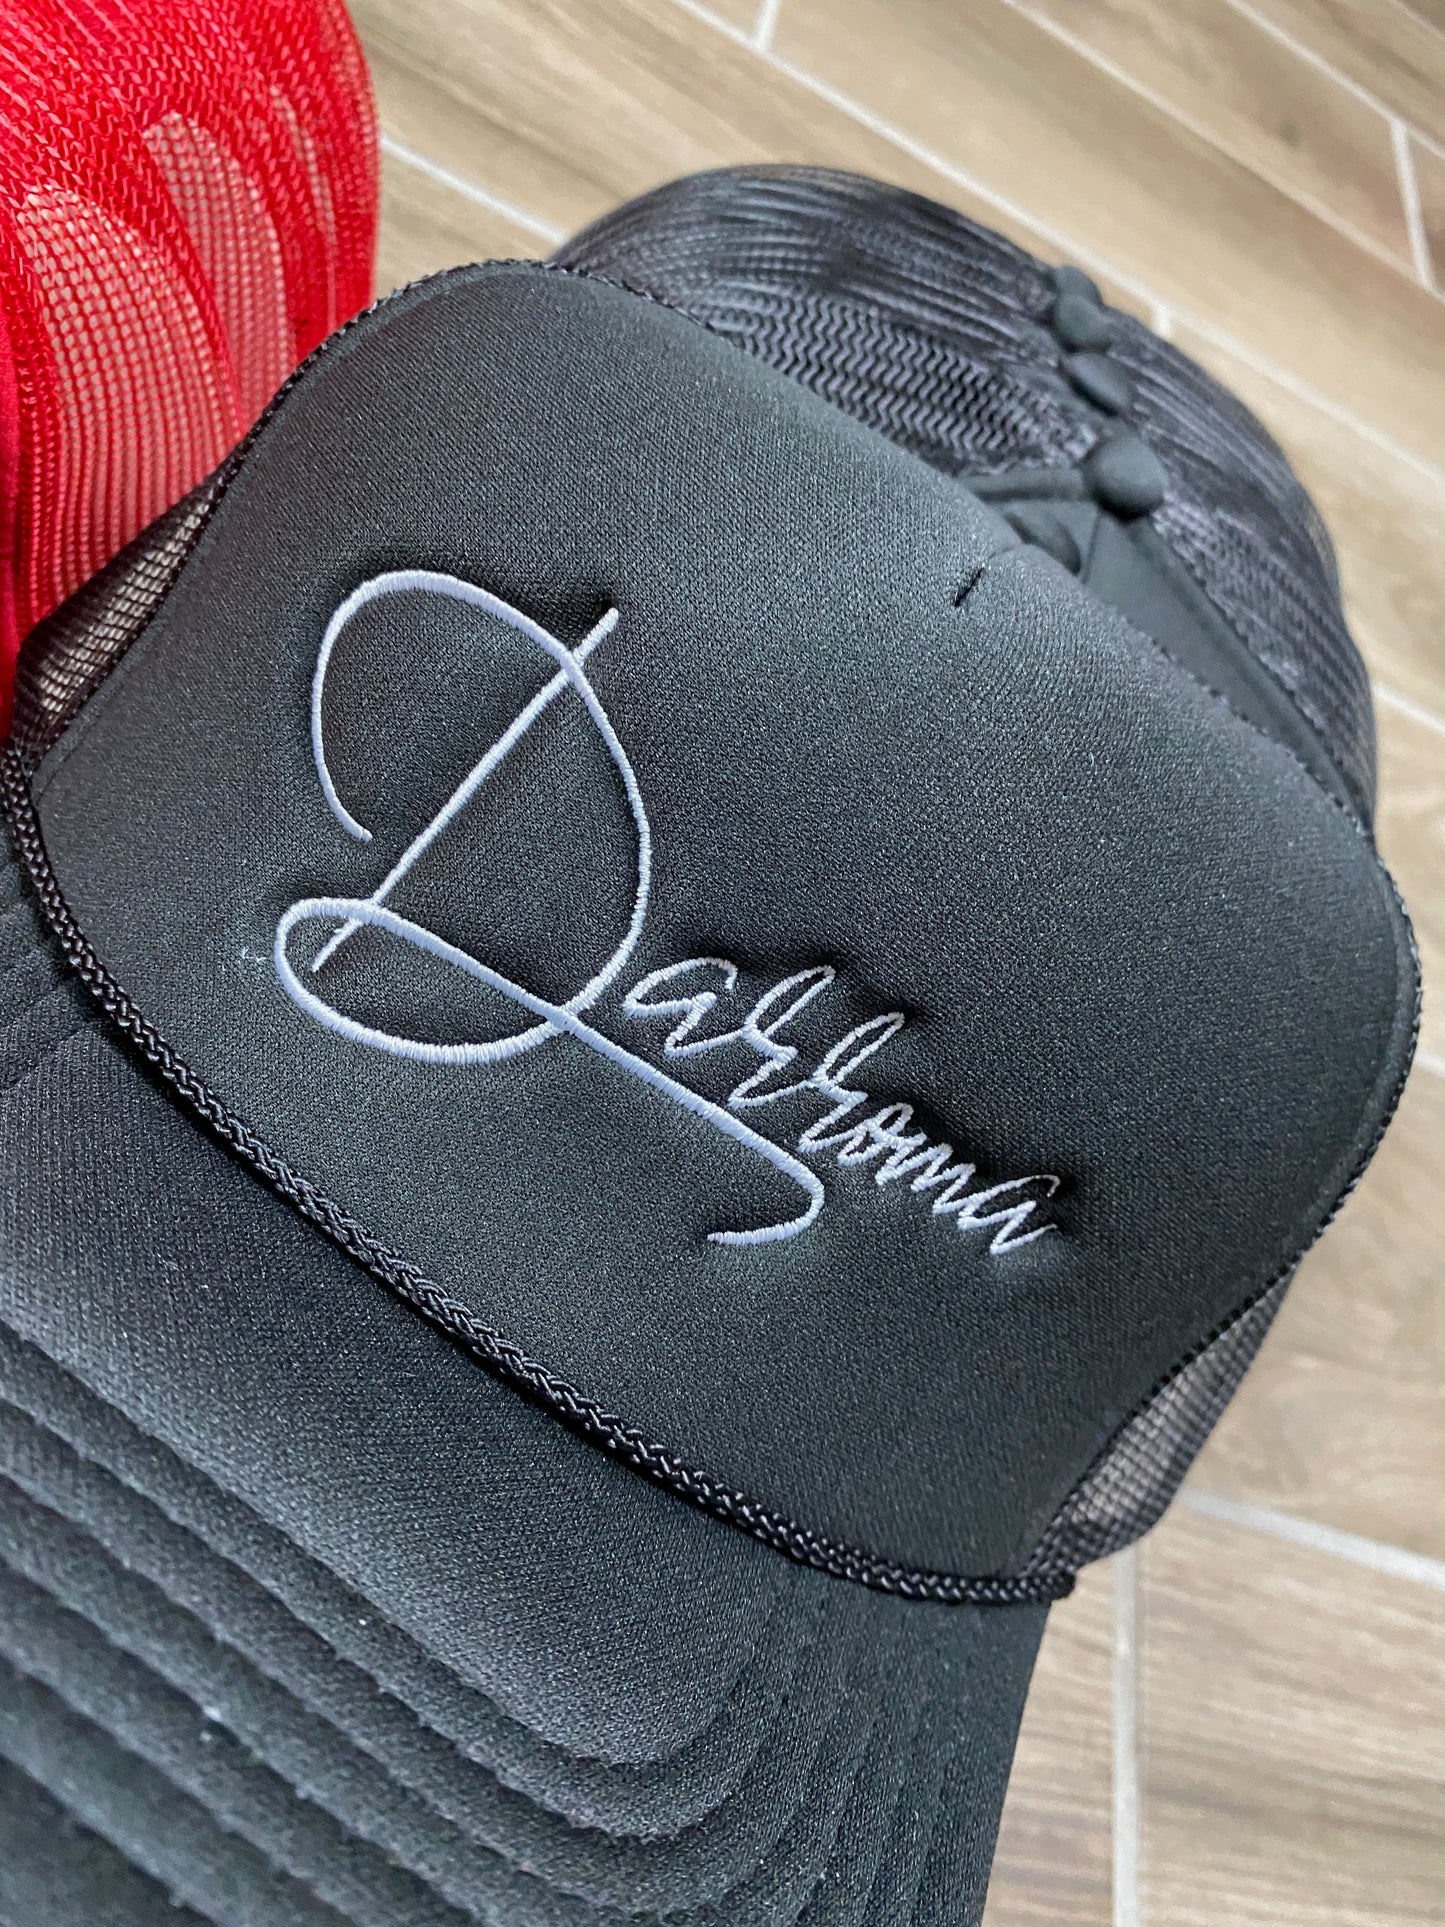 Darroma’s Trucker Hats